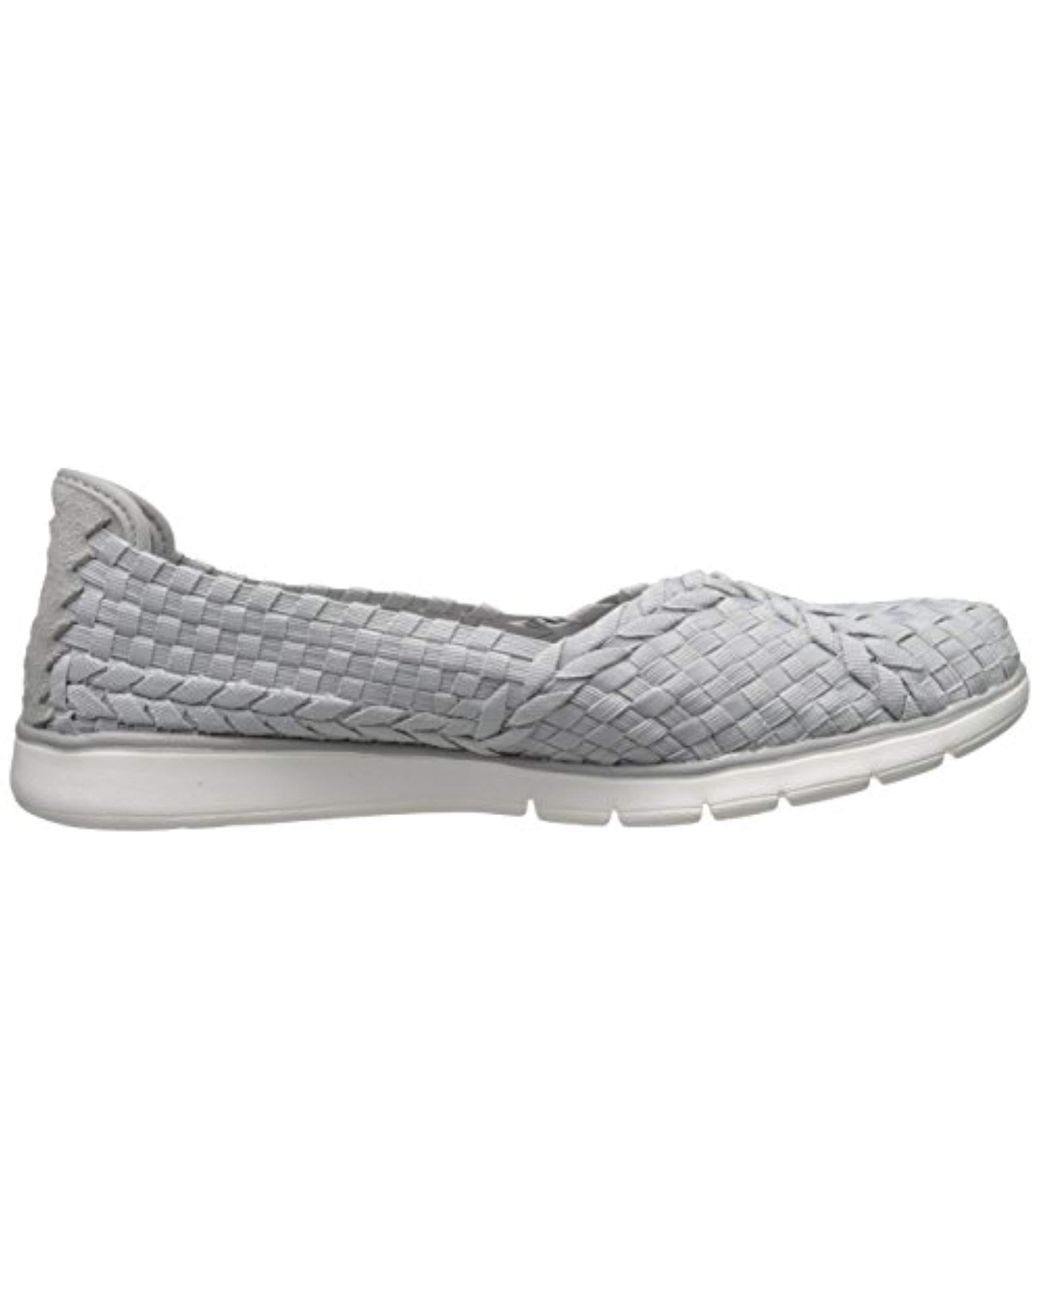 Skechers Bobs From Pureflex Fashion Slip-on Flat in Gray/White (Gray) | Lyst